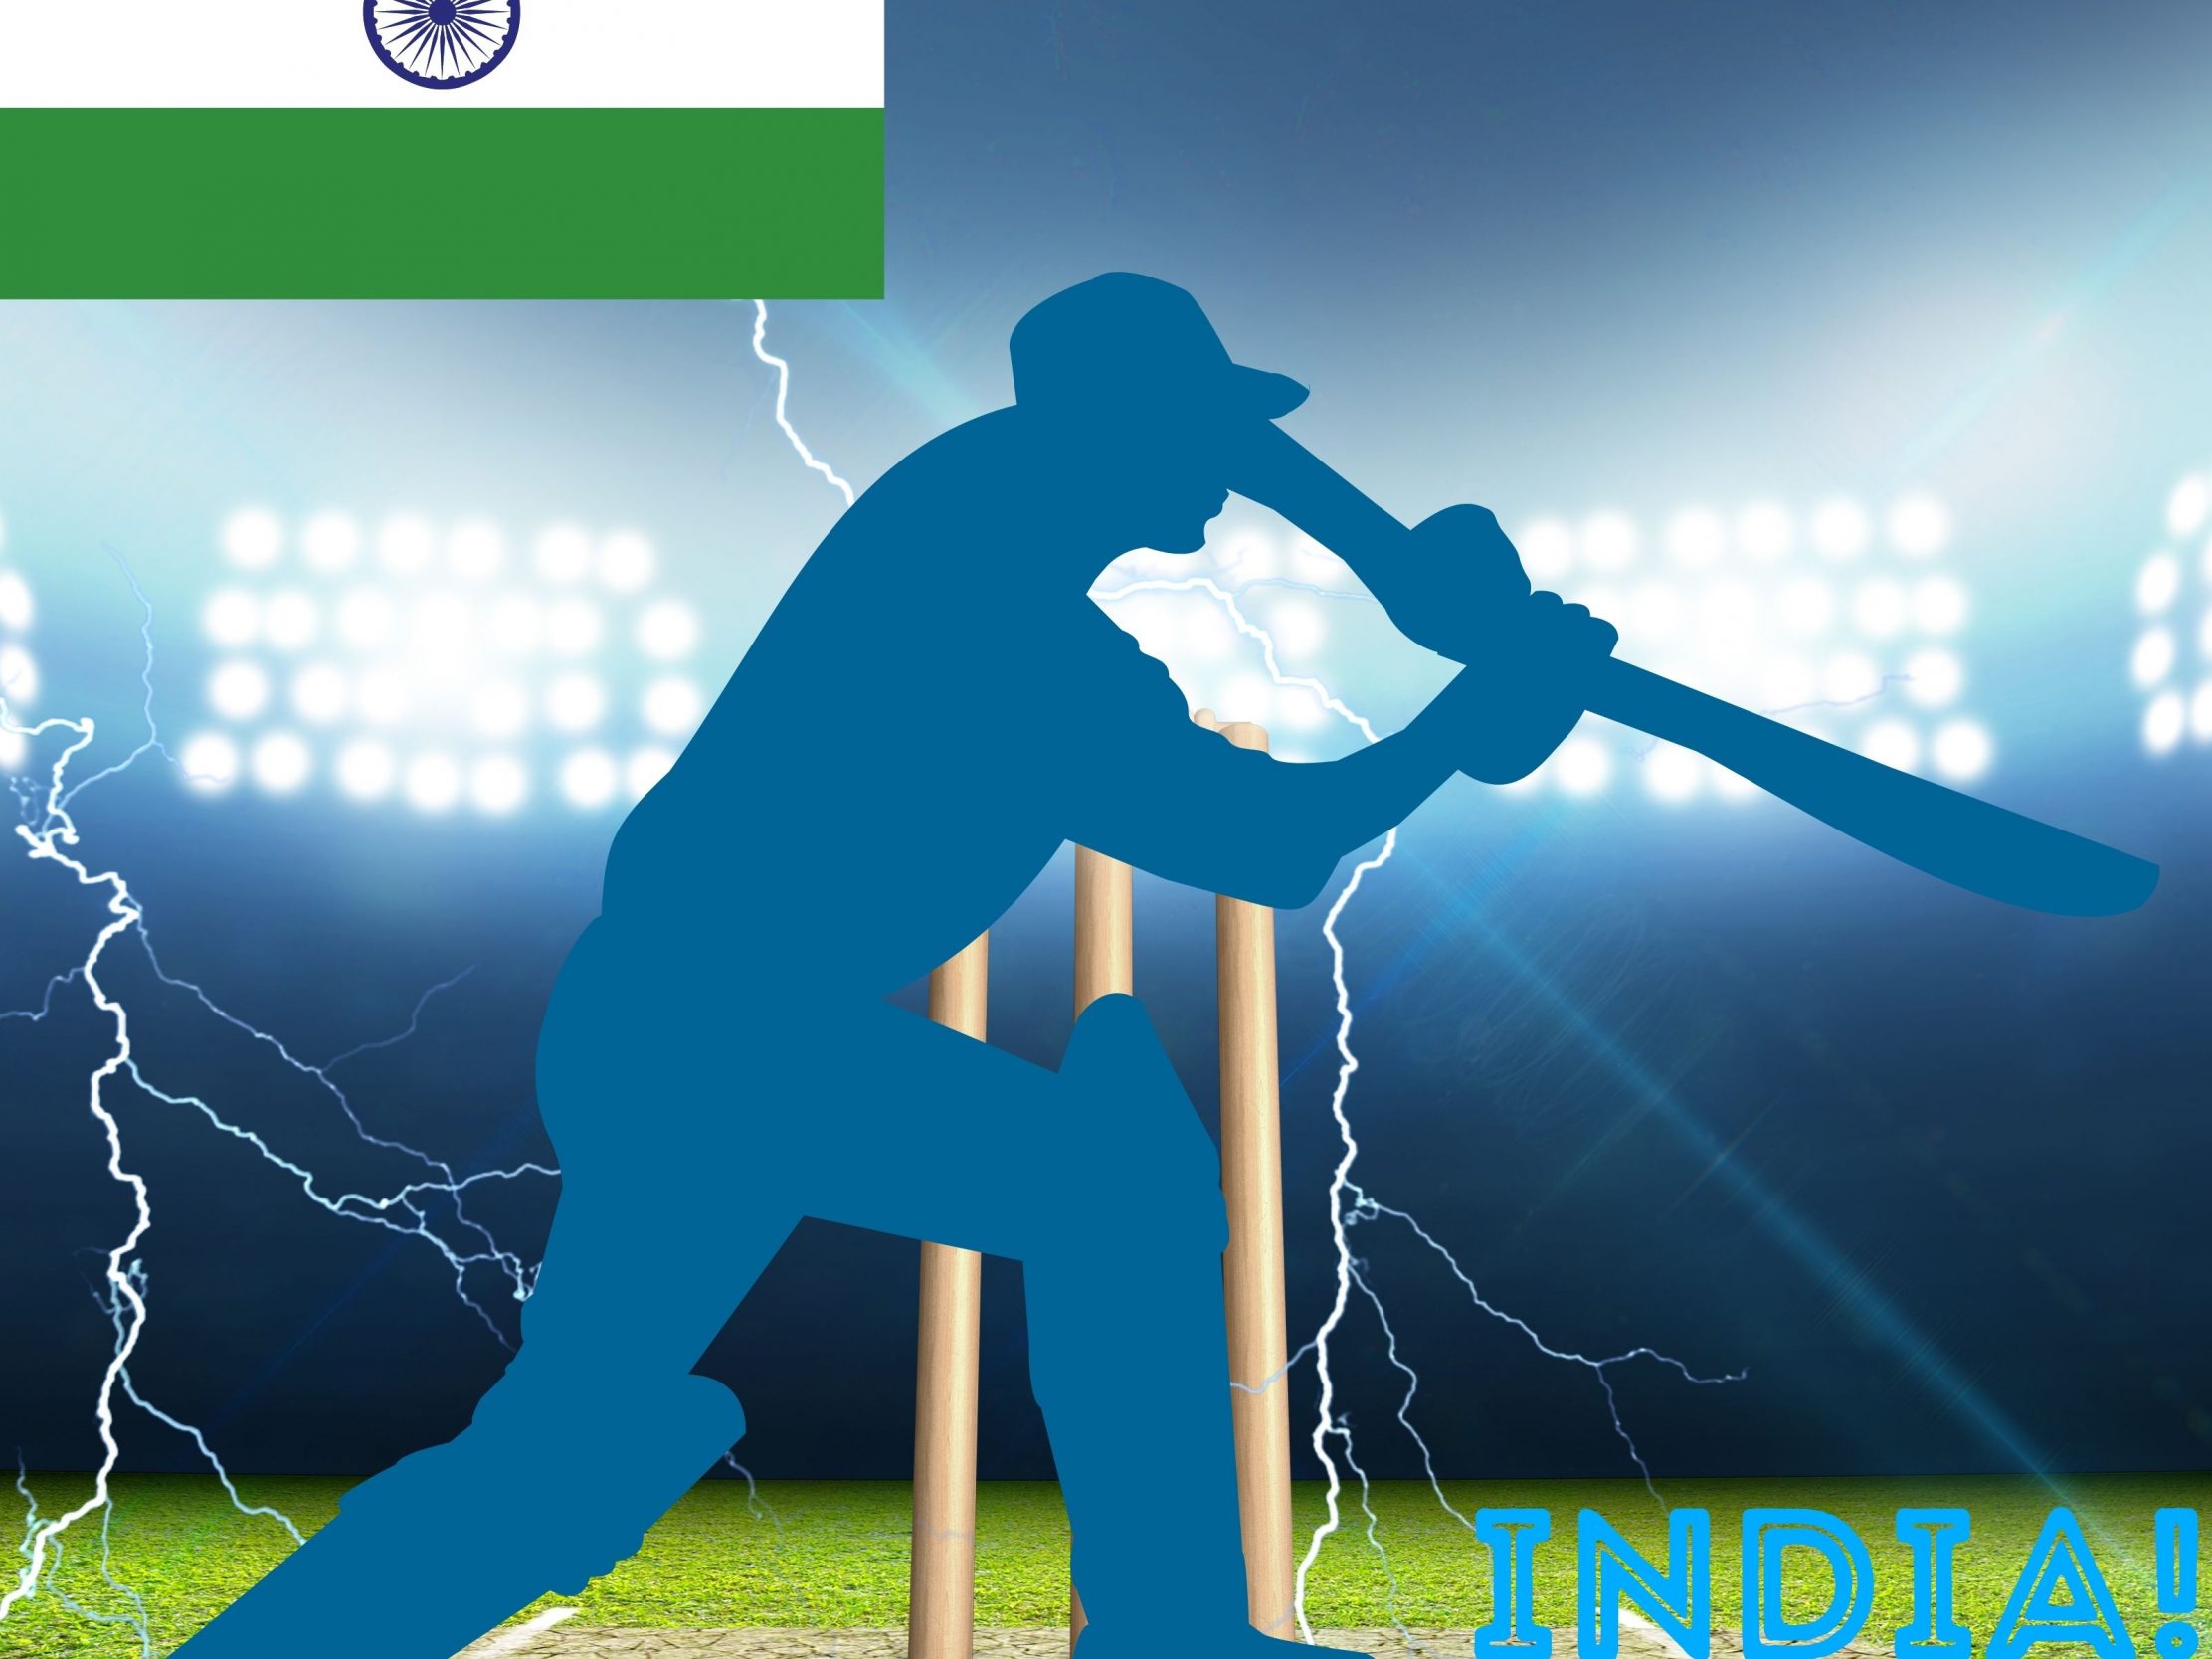 2224x1668 iPad Pro wallpapers India Cricket Stadium iPad Wallpaper 2224x1668 pixels resolution